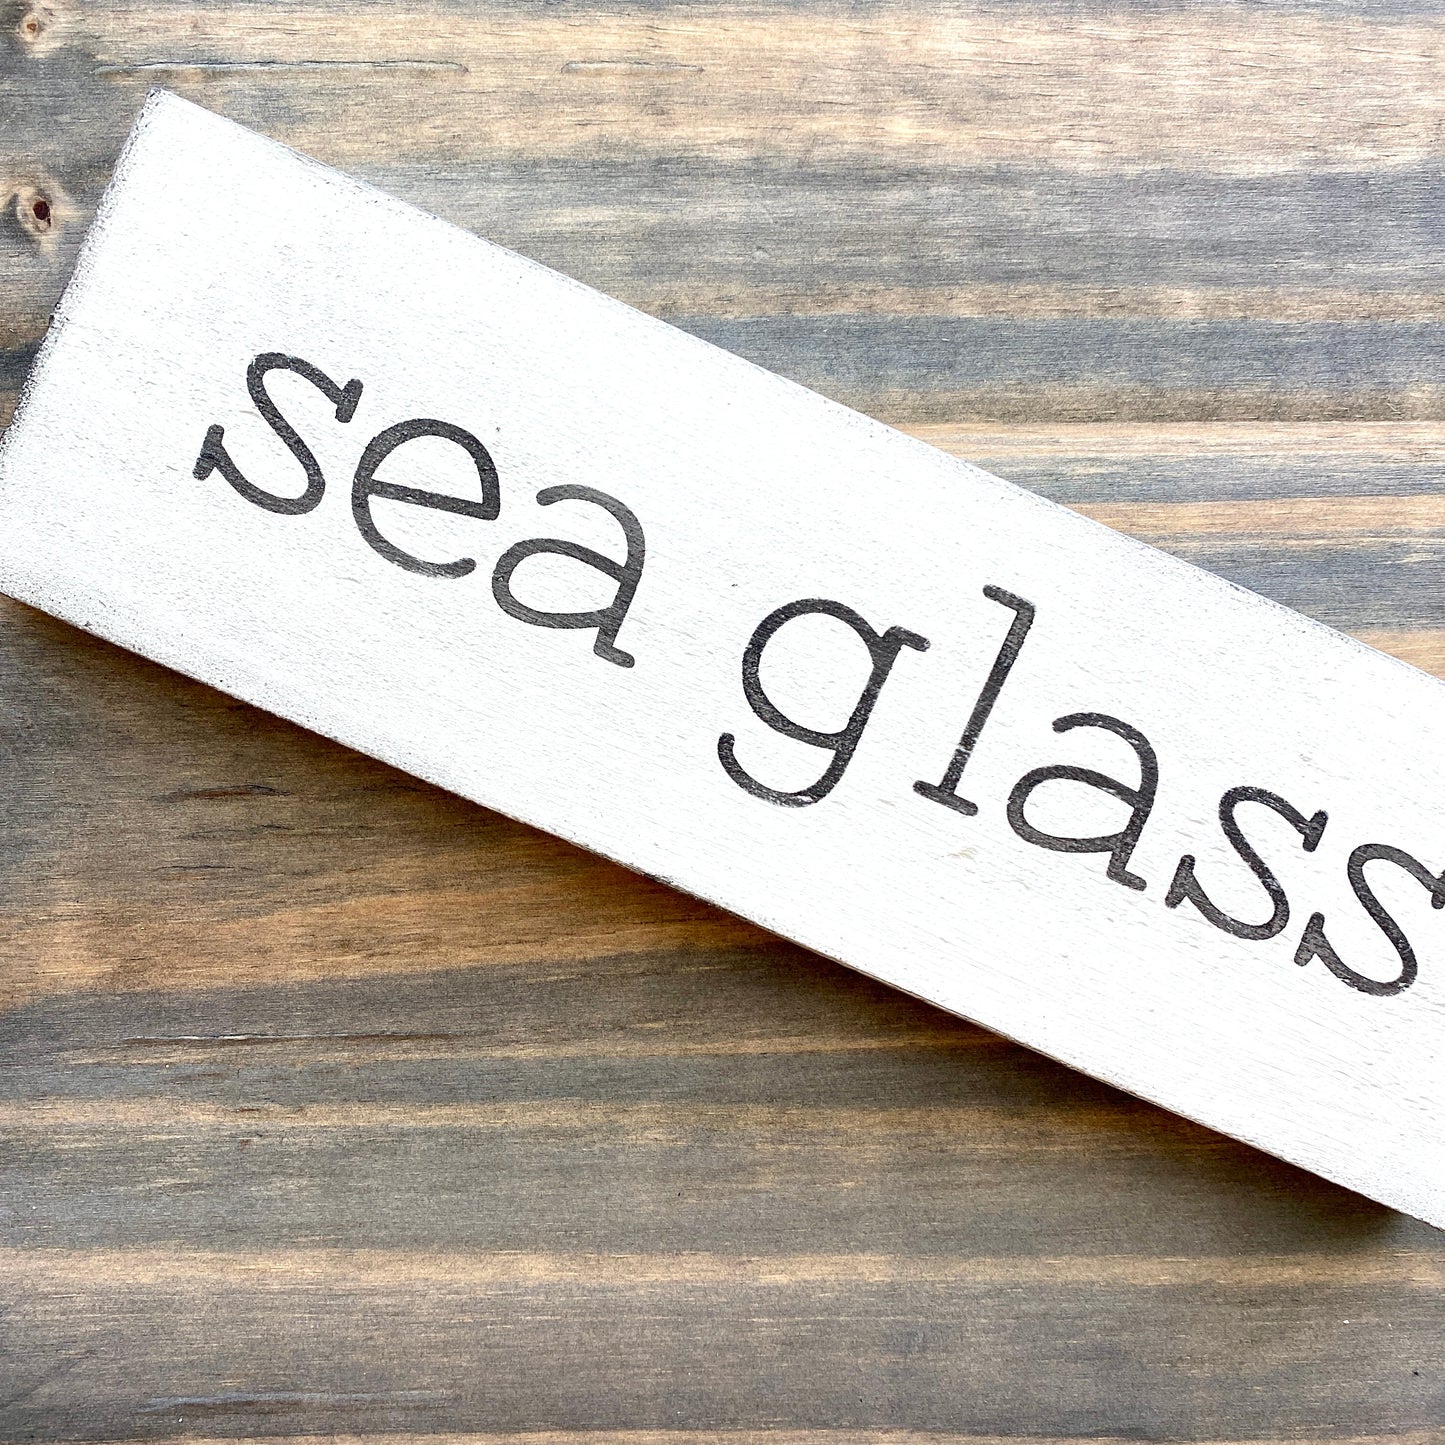 Sea Glass Sign